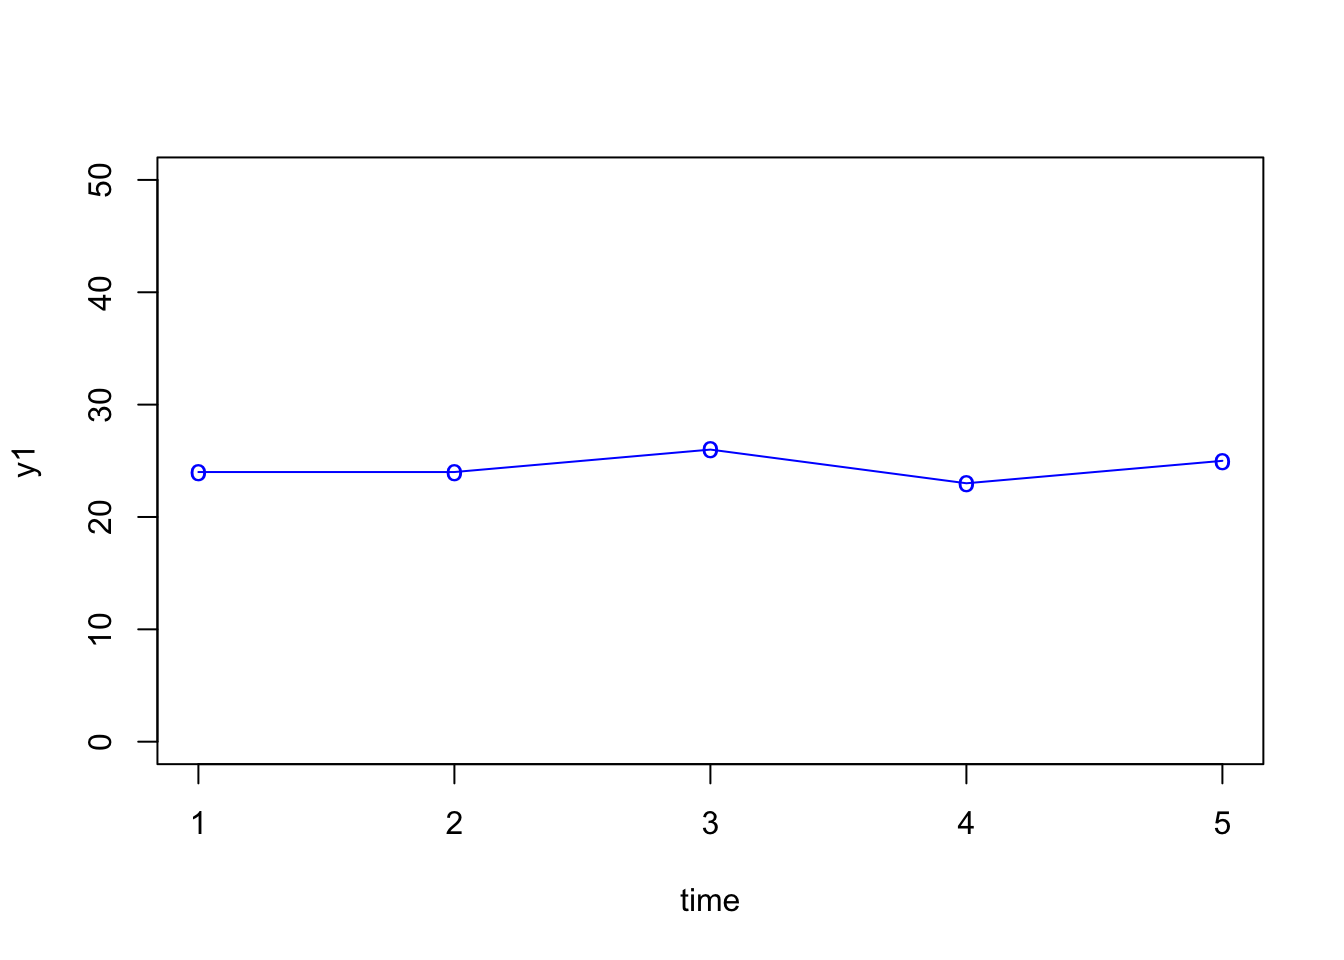 Multi line graph - first line